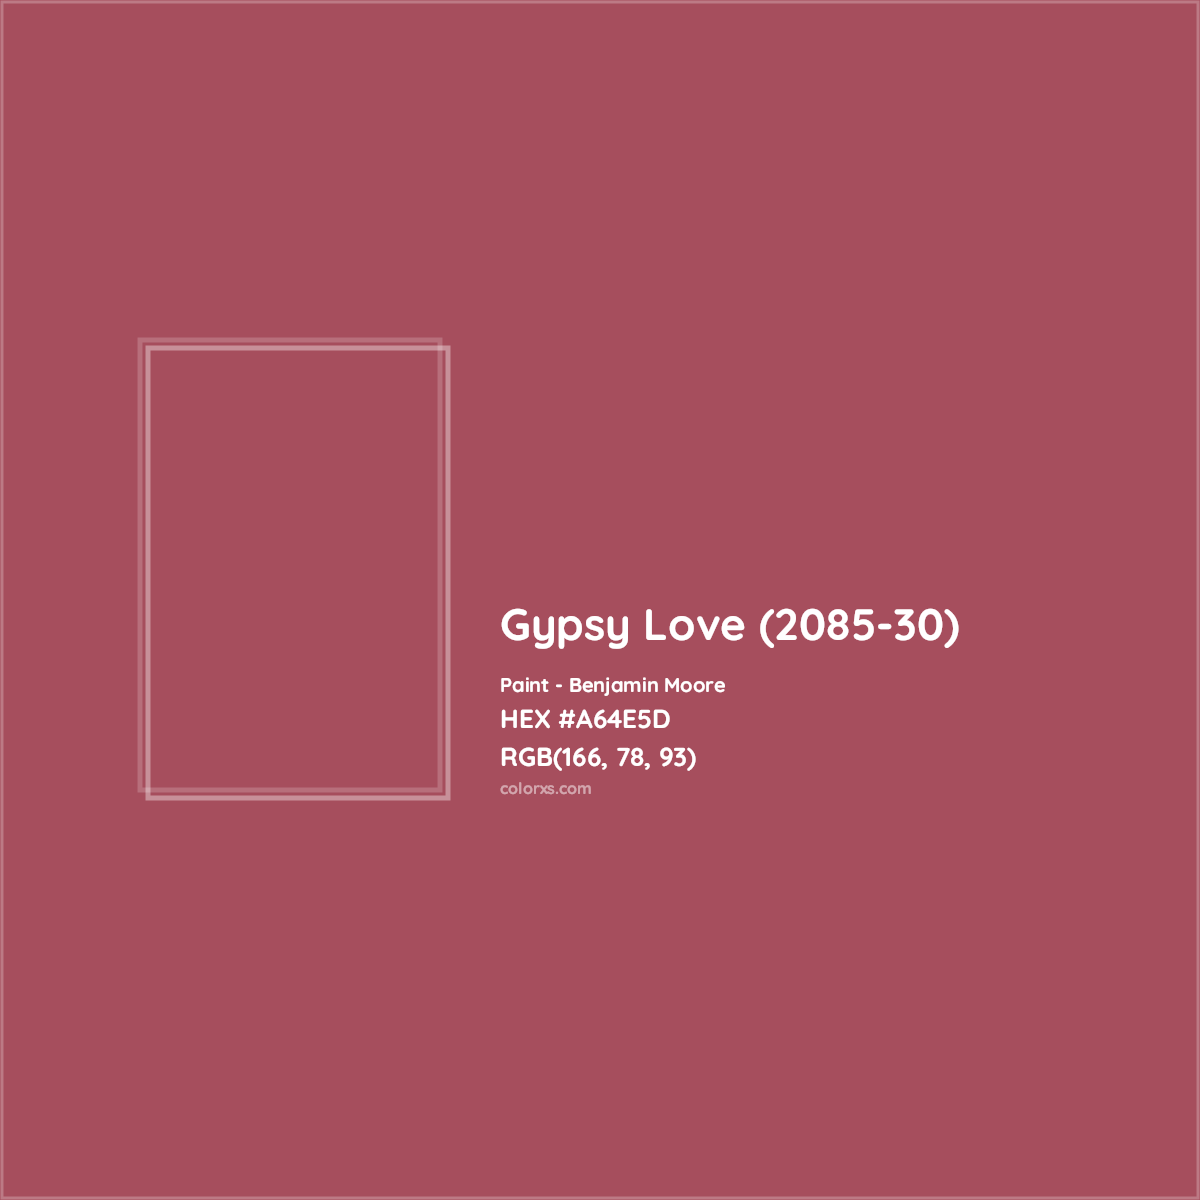 HEX #A64E5D Gypsy Love (2085-30) Paint Benjamin Moore - Color Code